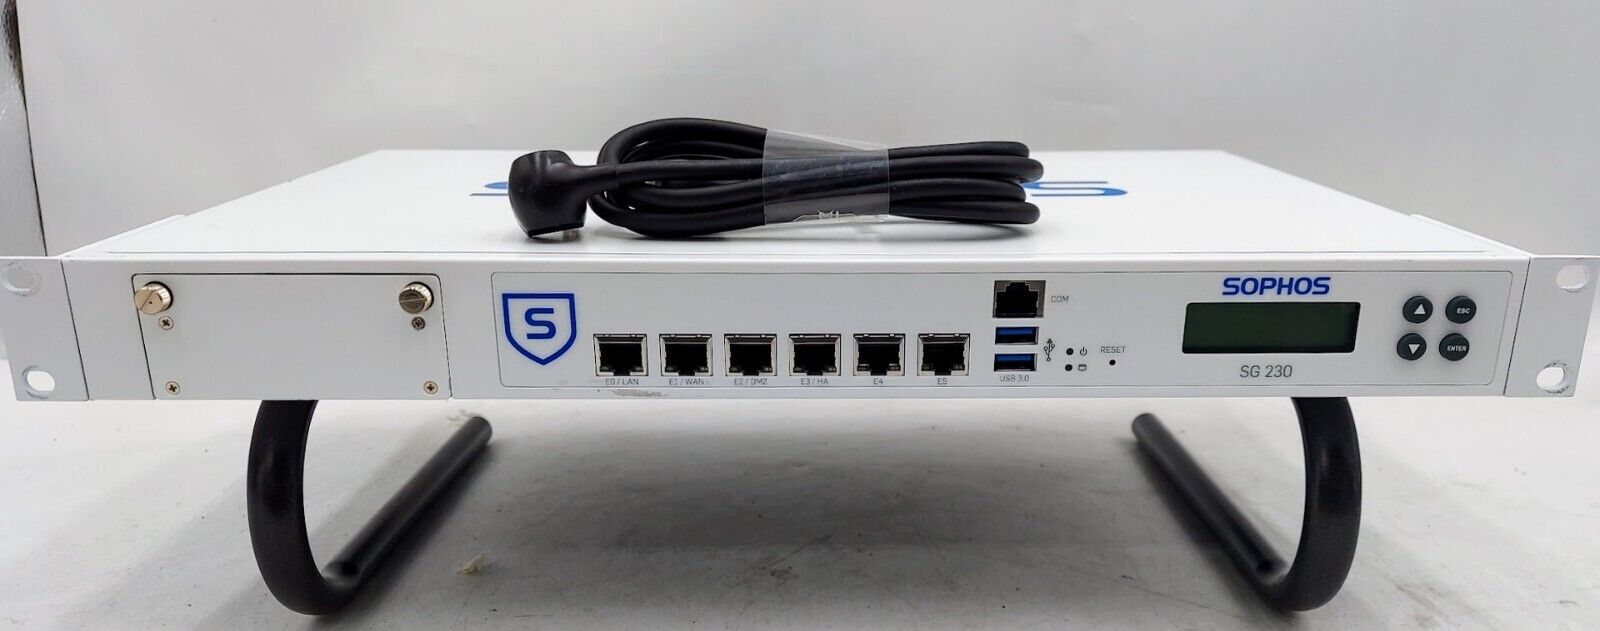 Sophos SG 230 rev.1 Firewall Security Appliance